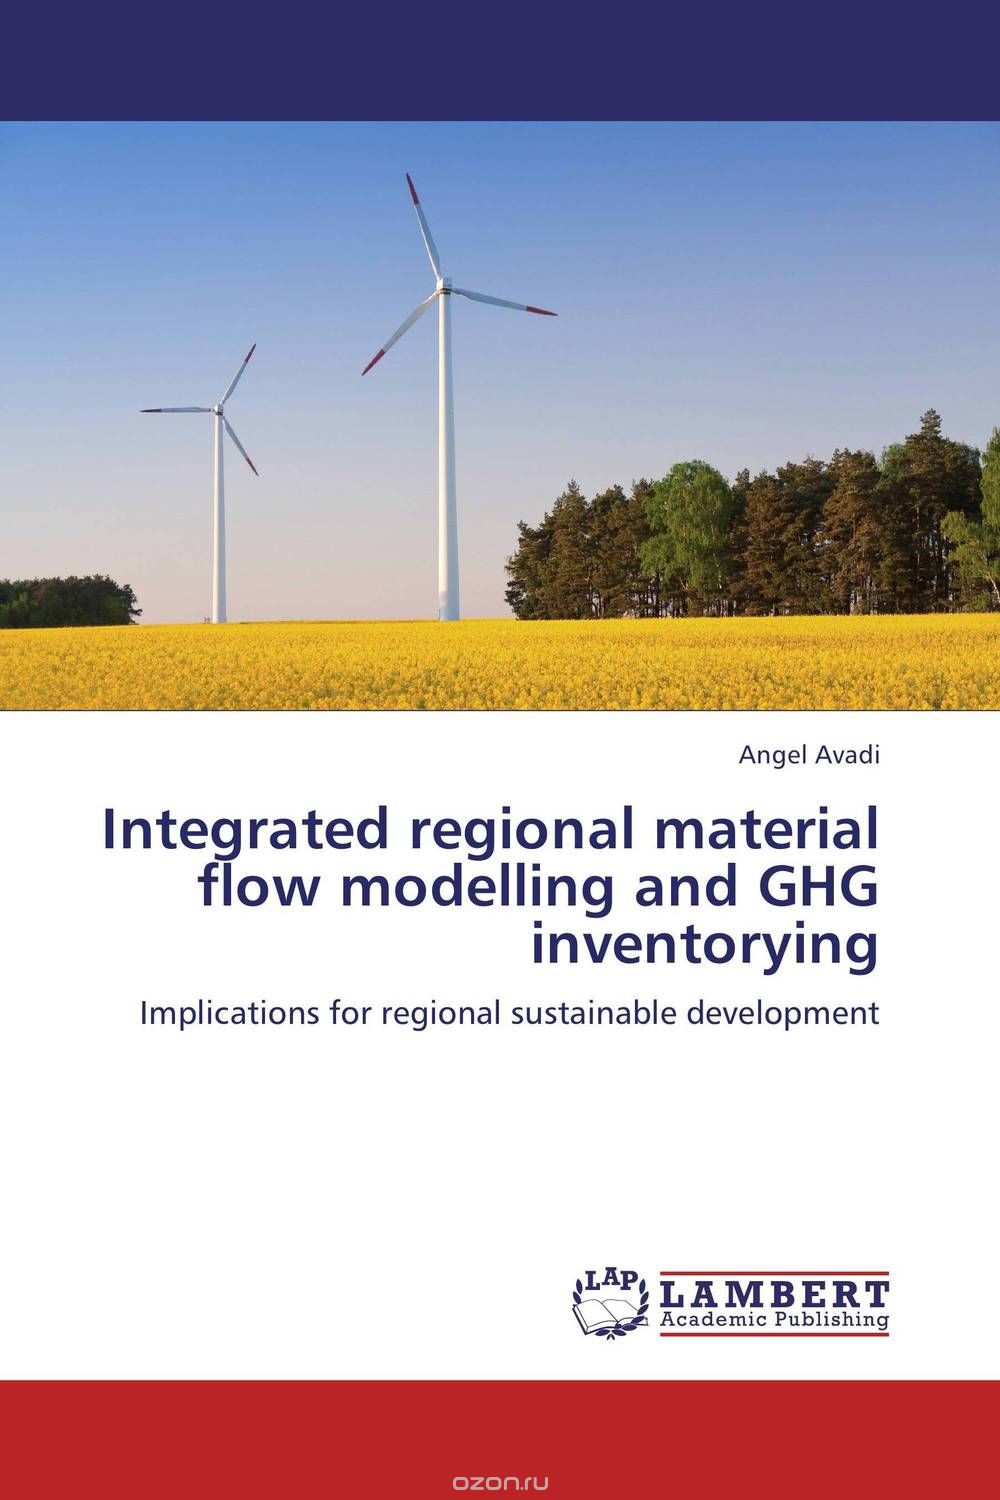 Скачать книгу "Integrated regional material flow modelling and GHG inventorying"